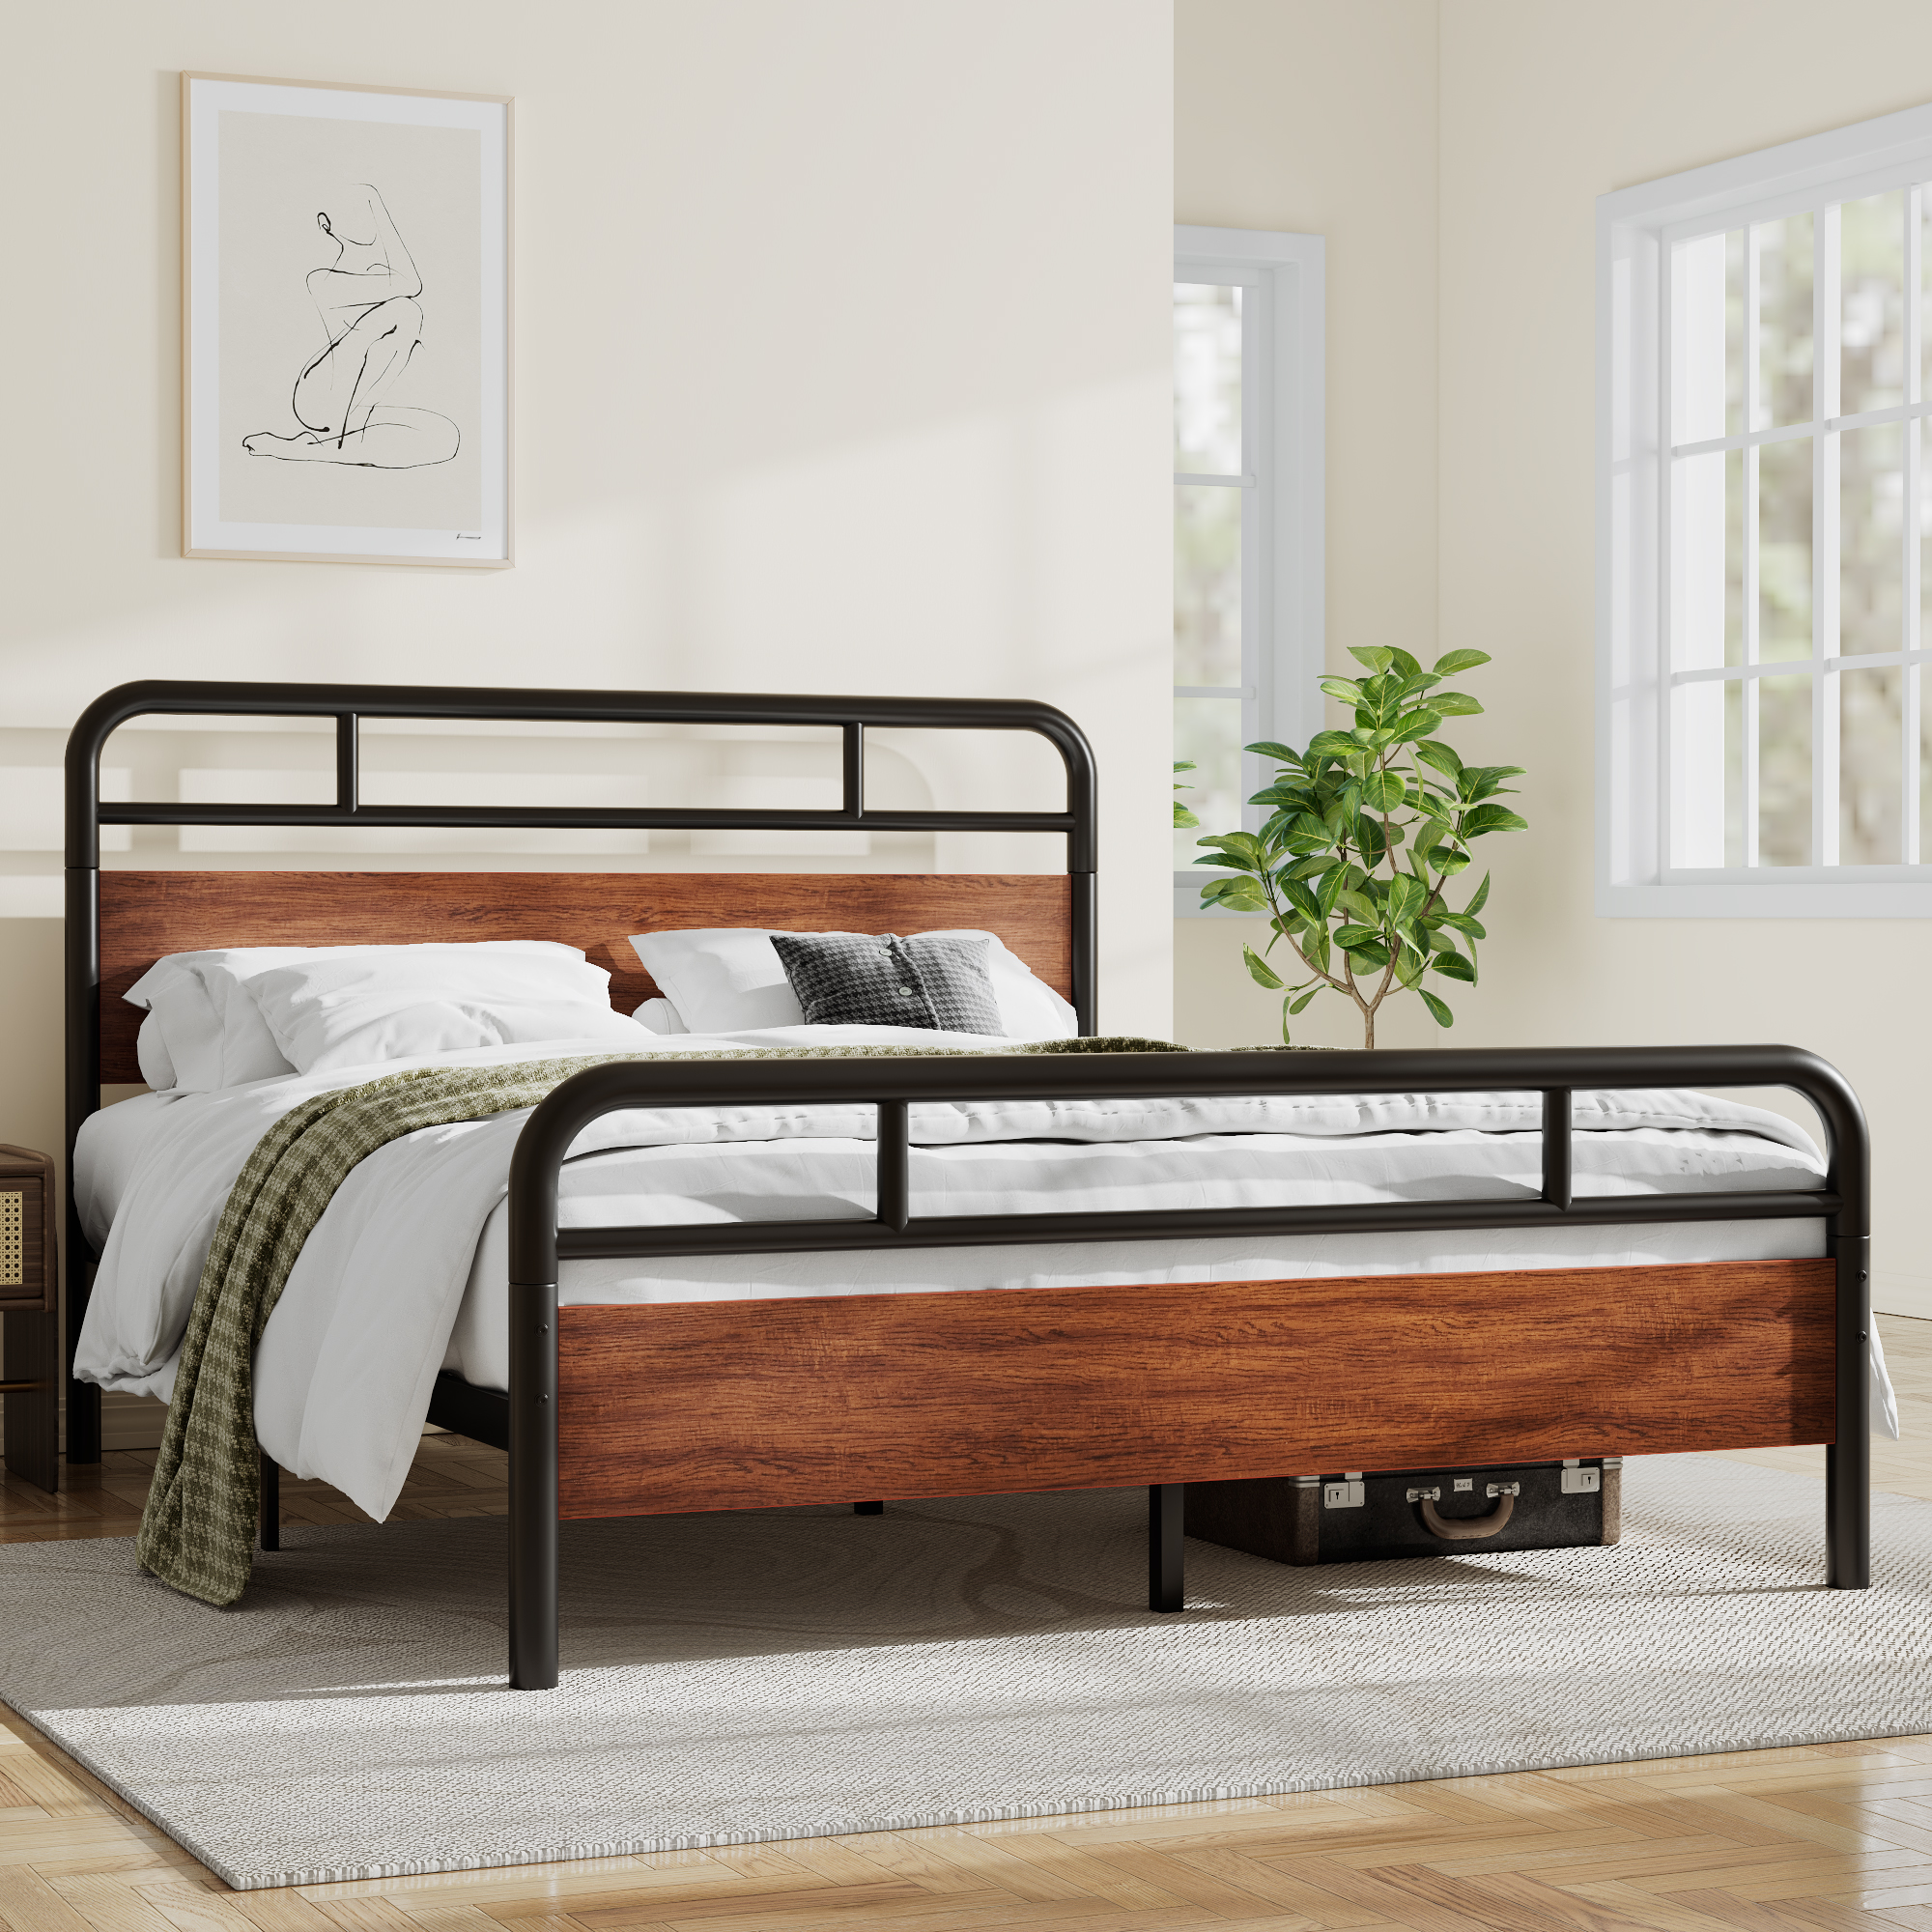 Sha Cerlin Light Brown Queen Size Metal Platform Bed Frame with Industrial Heavy Duty Wooden Headboard - image 1 of 10